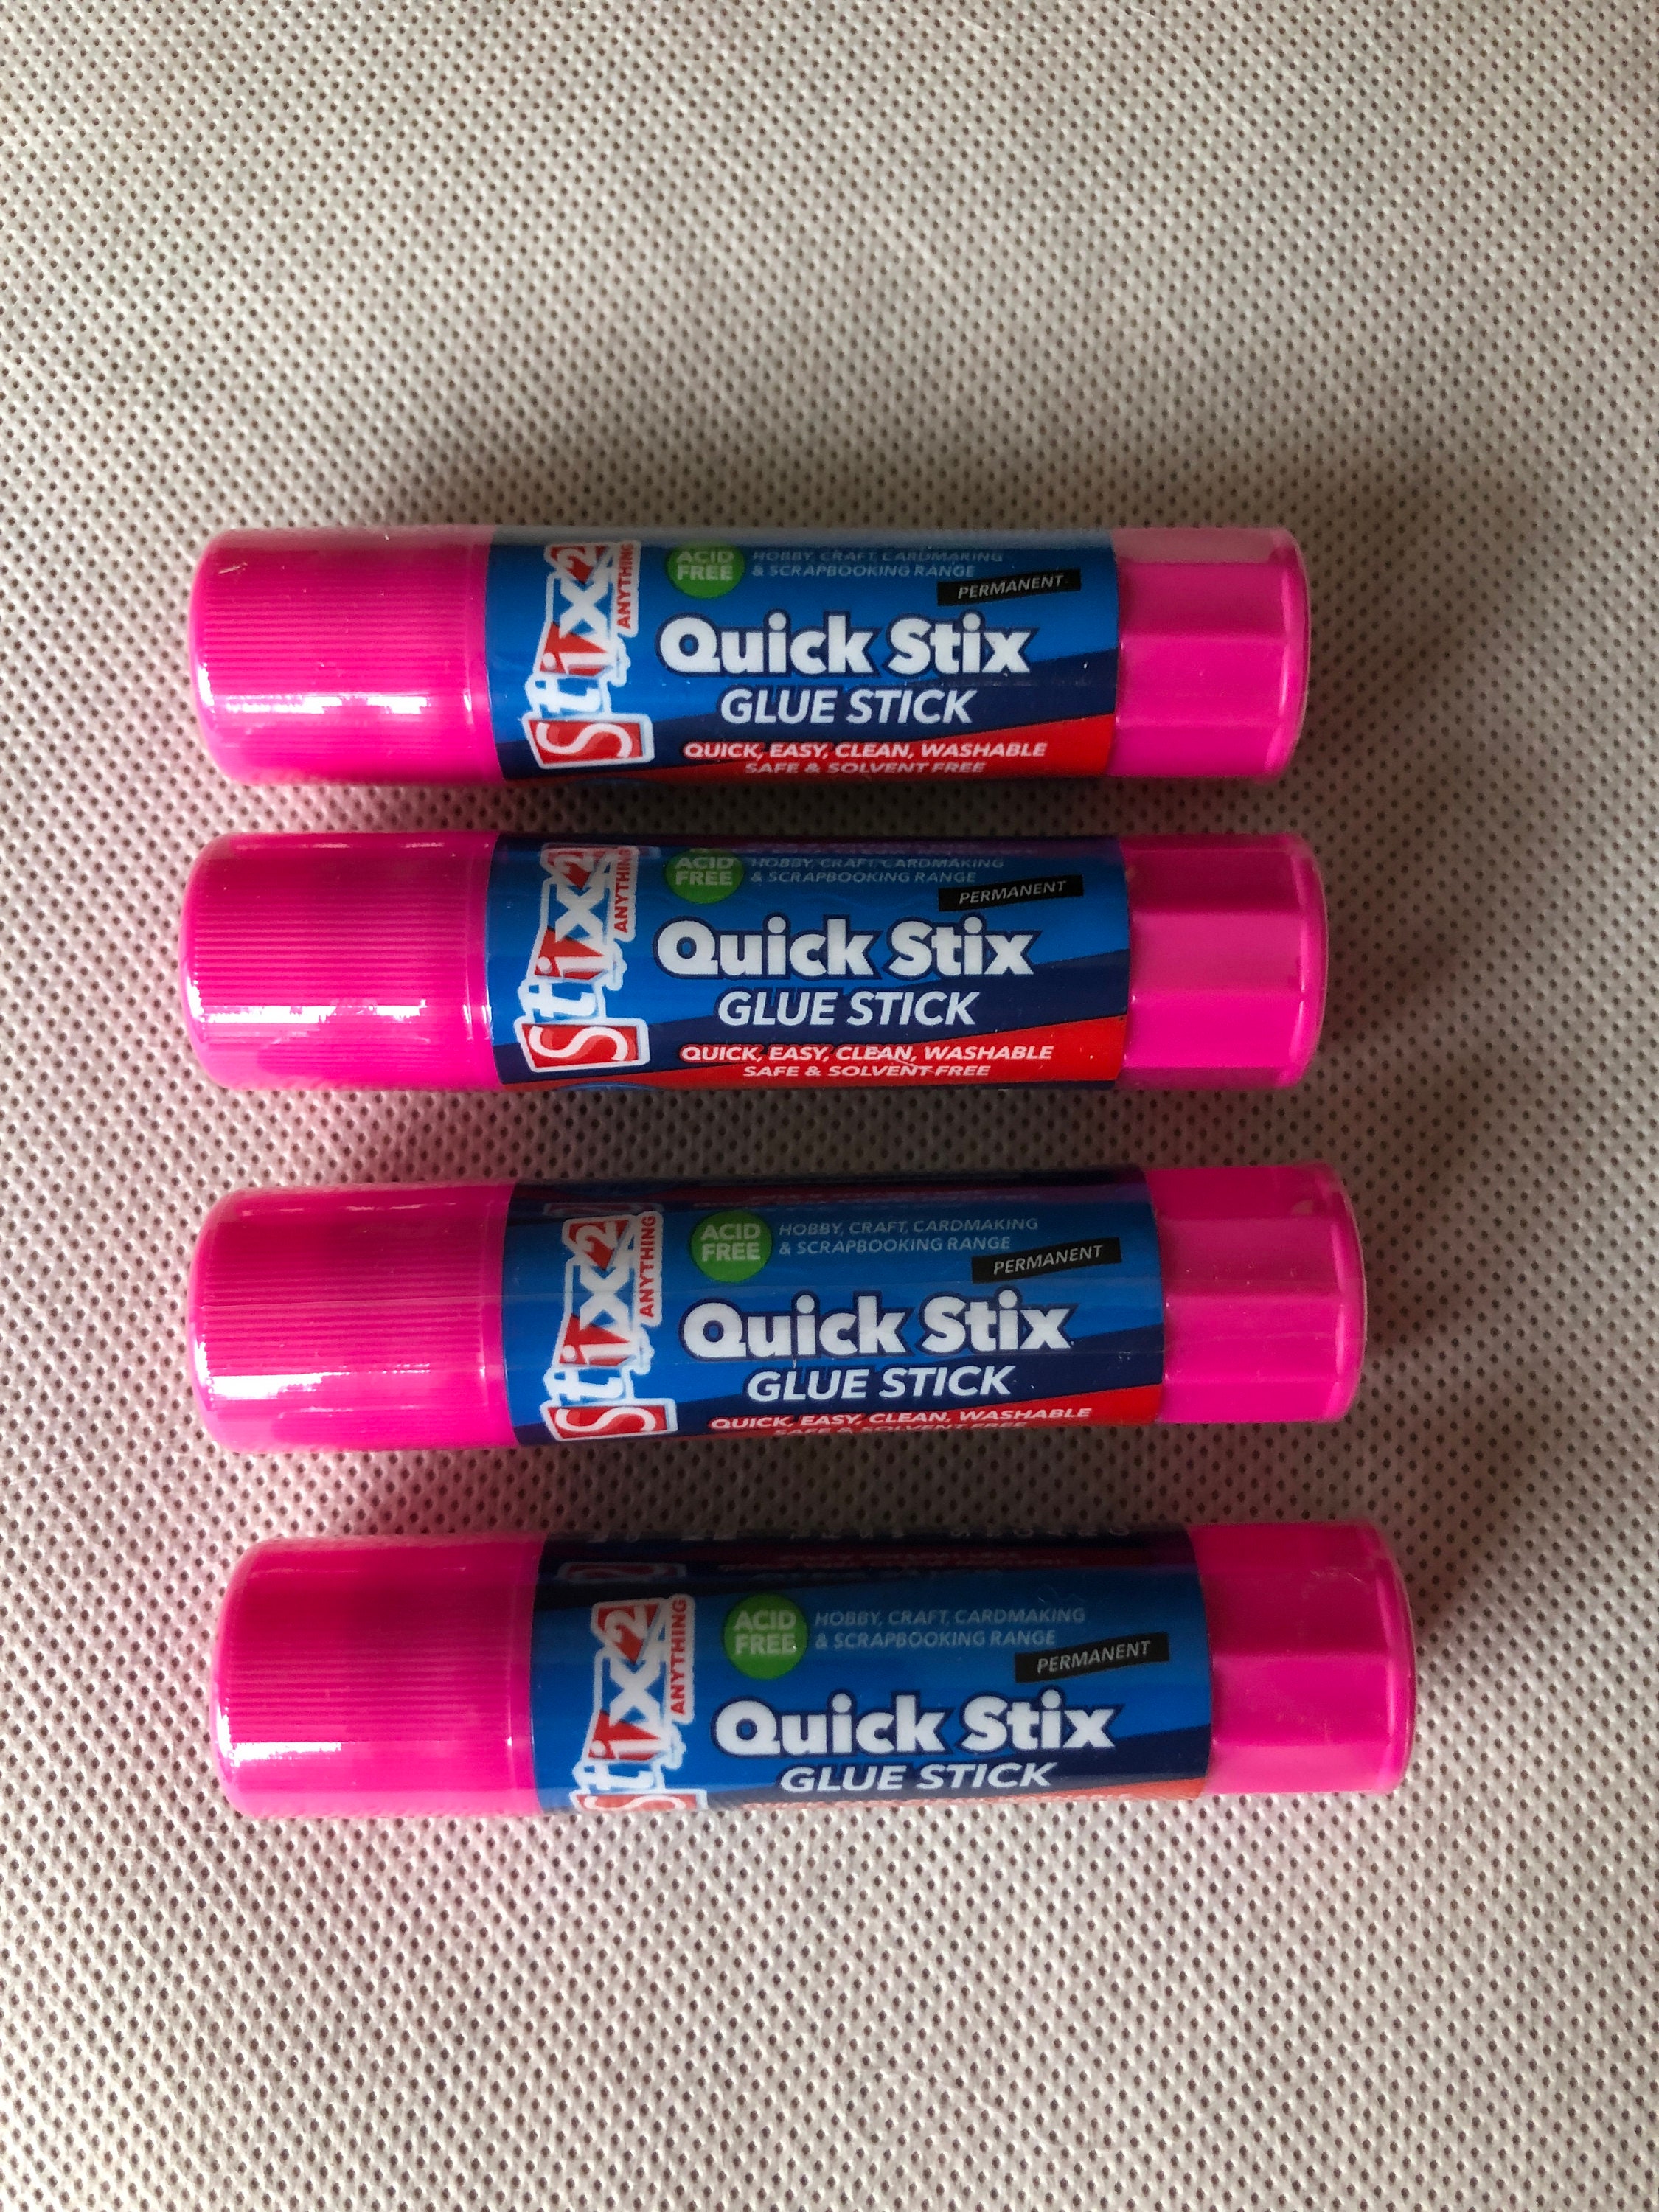 Stix2 Hot Melt Electric Pink Glue Gun & 2 Sticks Craft Cardmaking